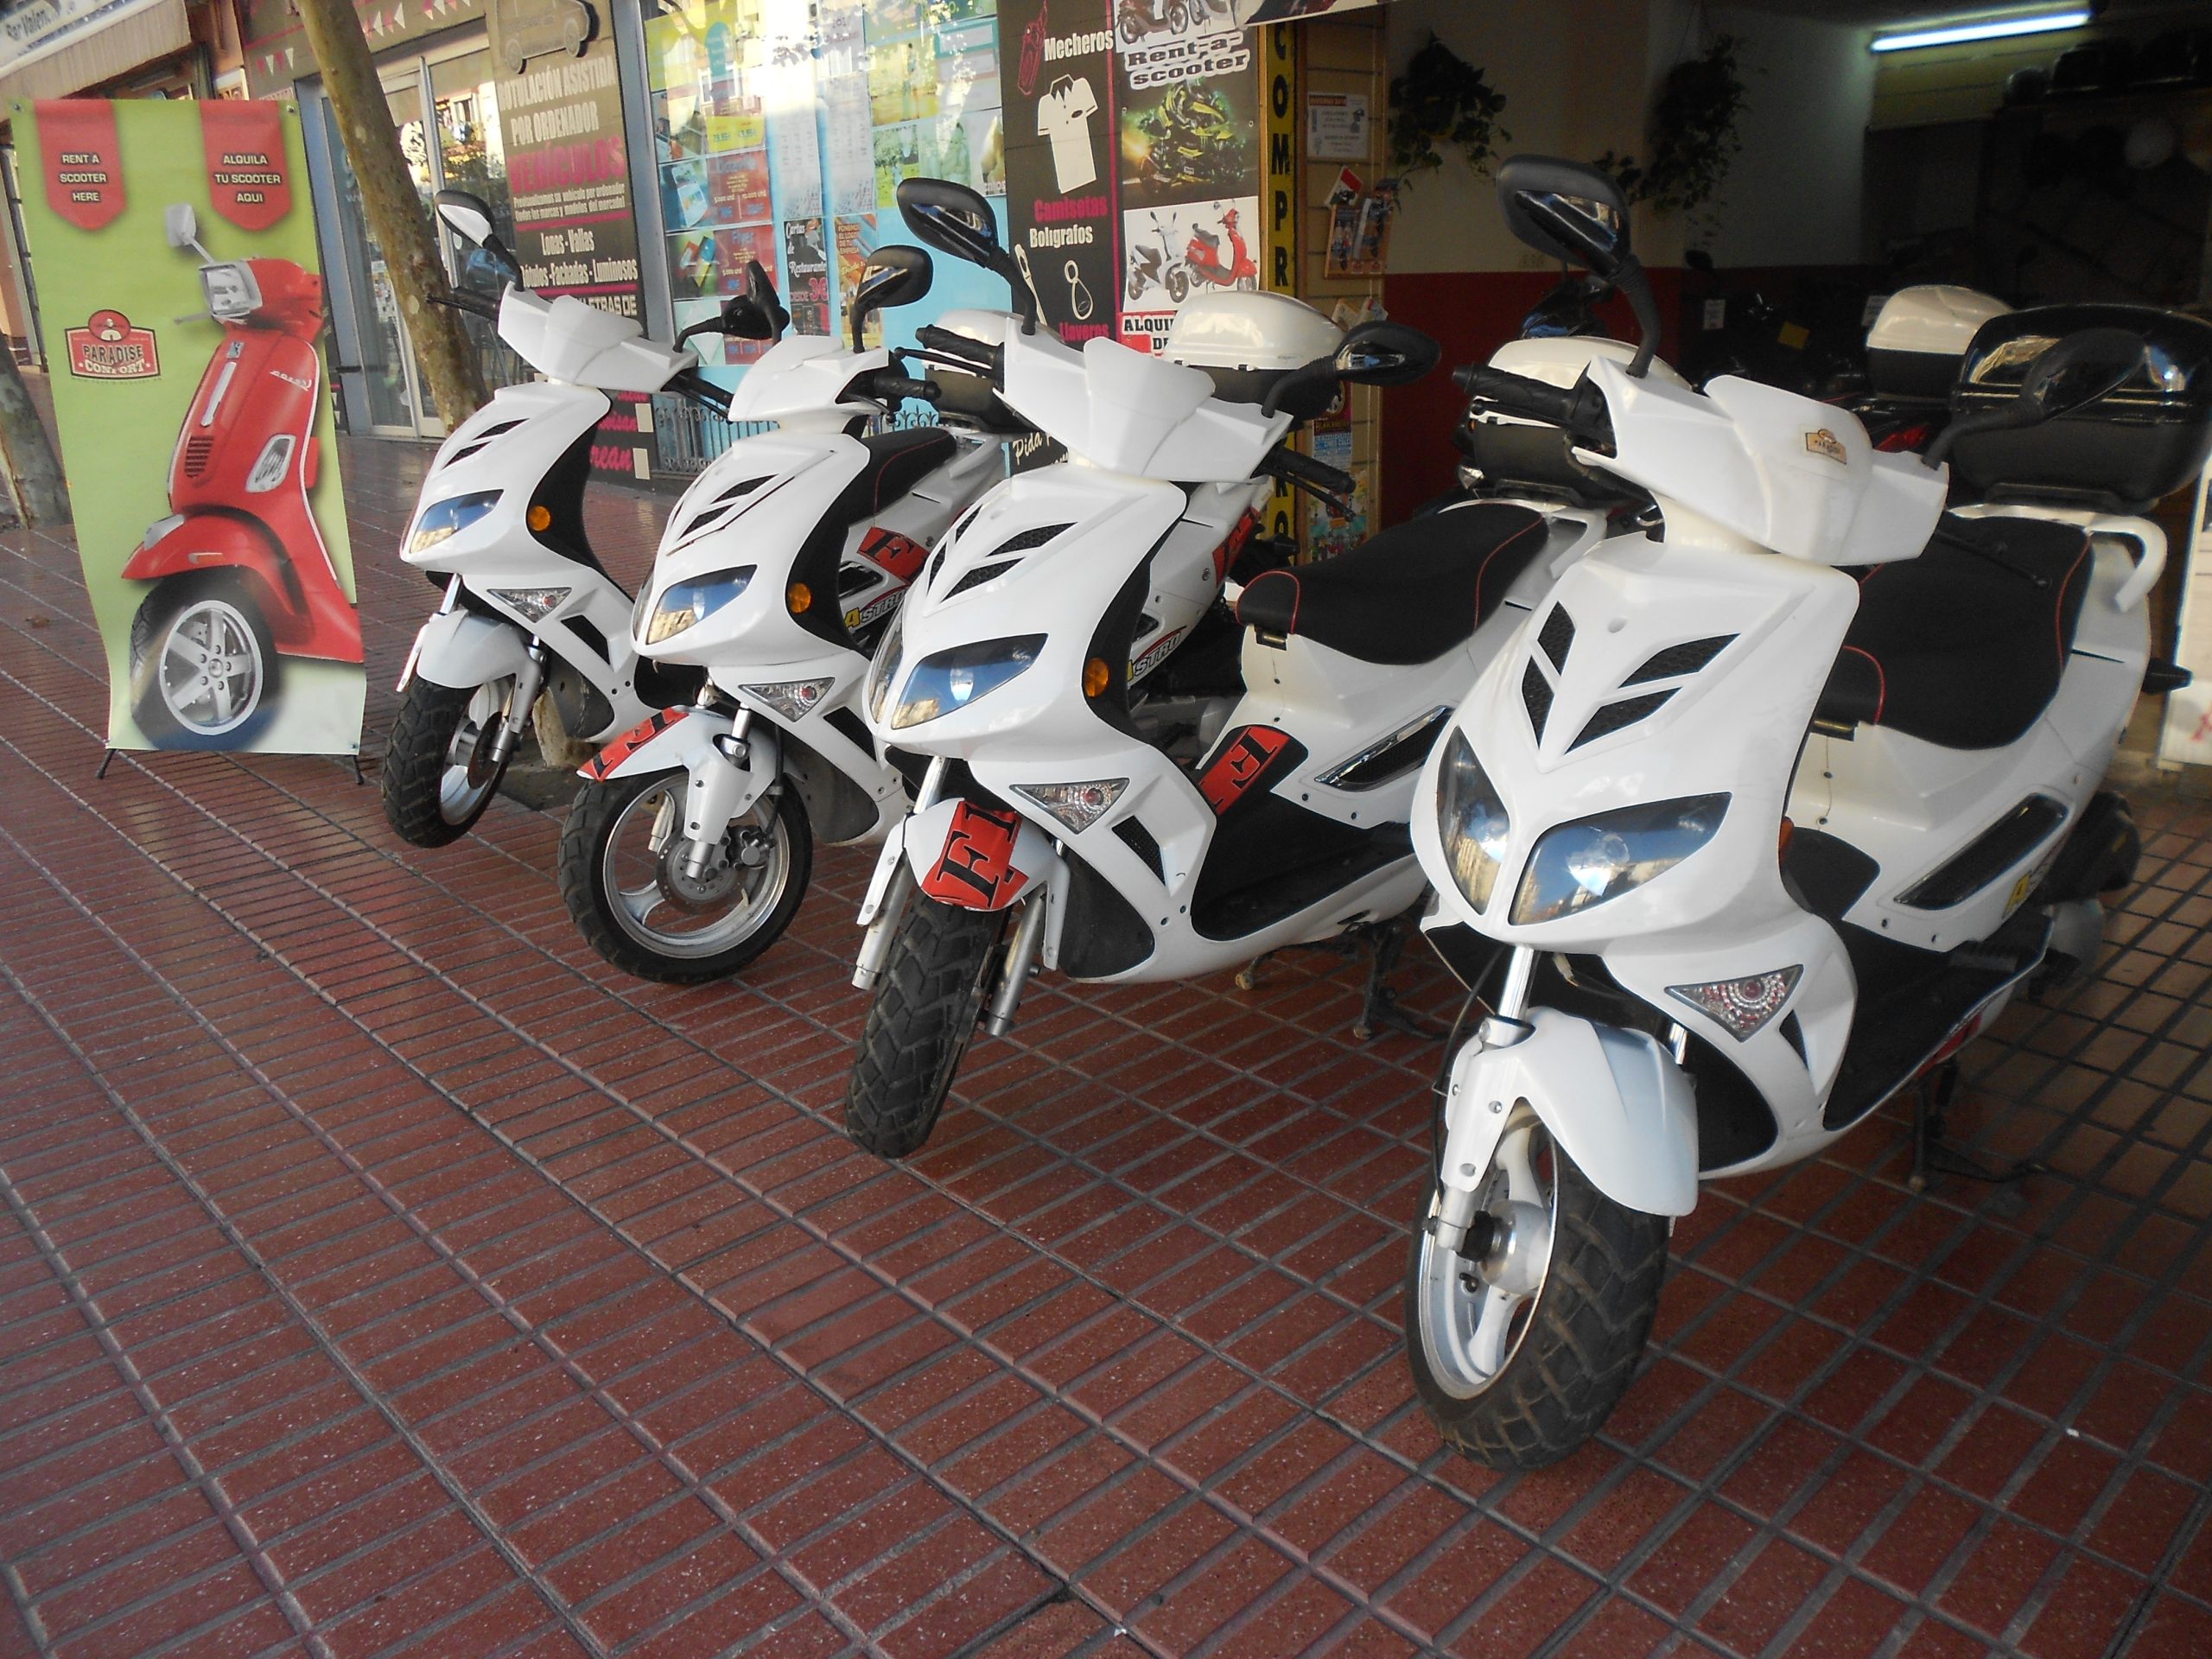 Alquiler de motos scooter en Alicante para reparto 5€ 24horas